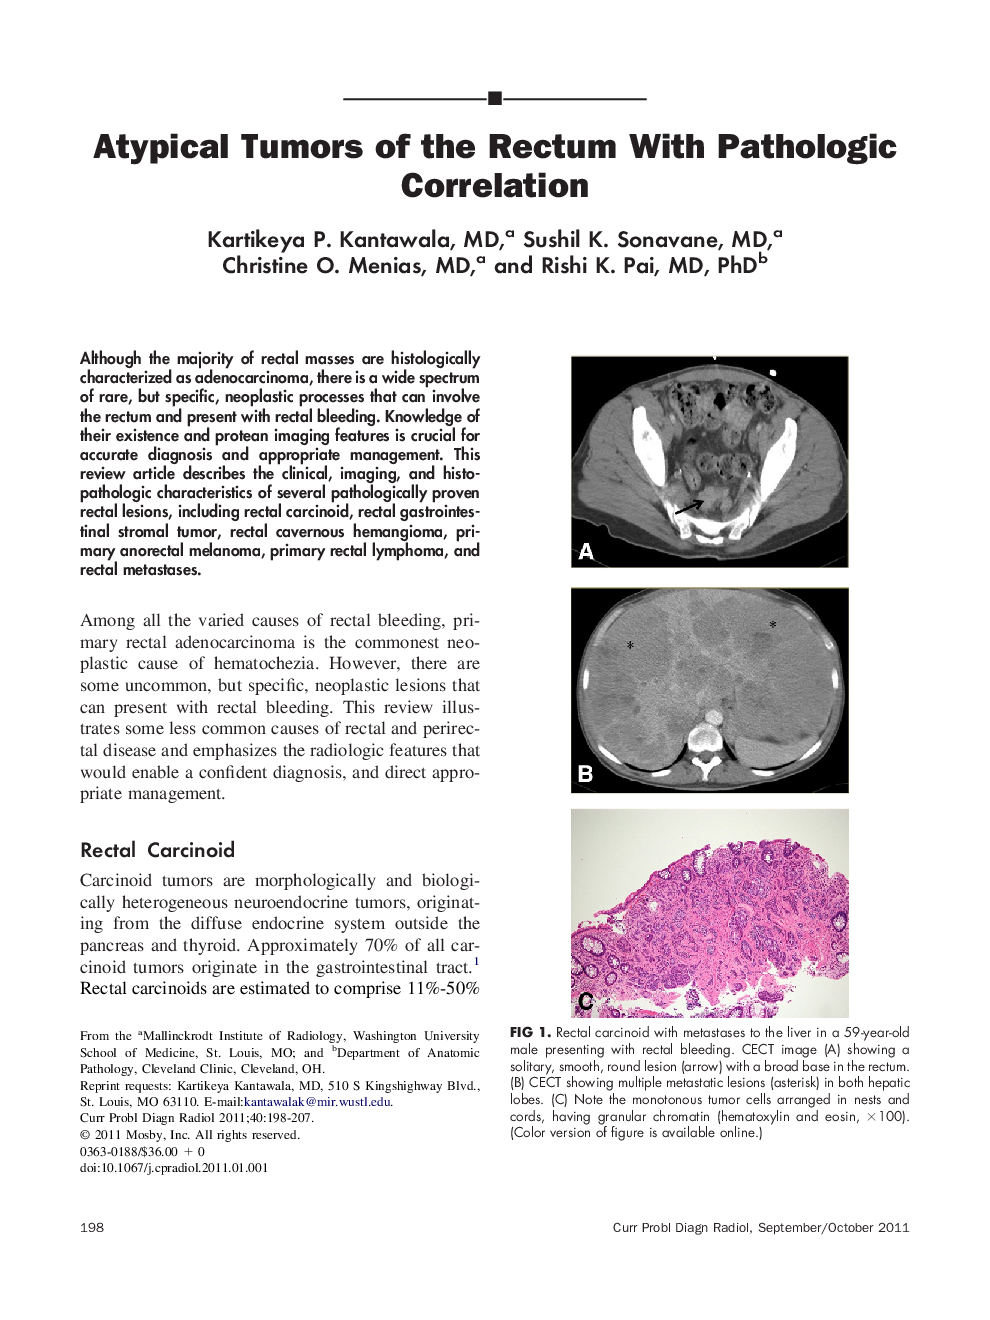 Atypical Tumors of the Rectum With Pathologic Correlation